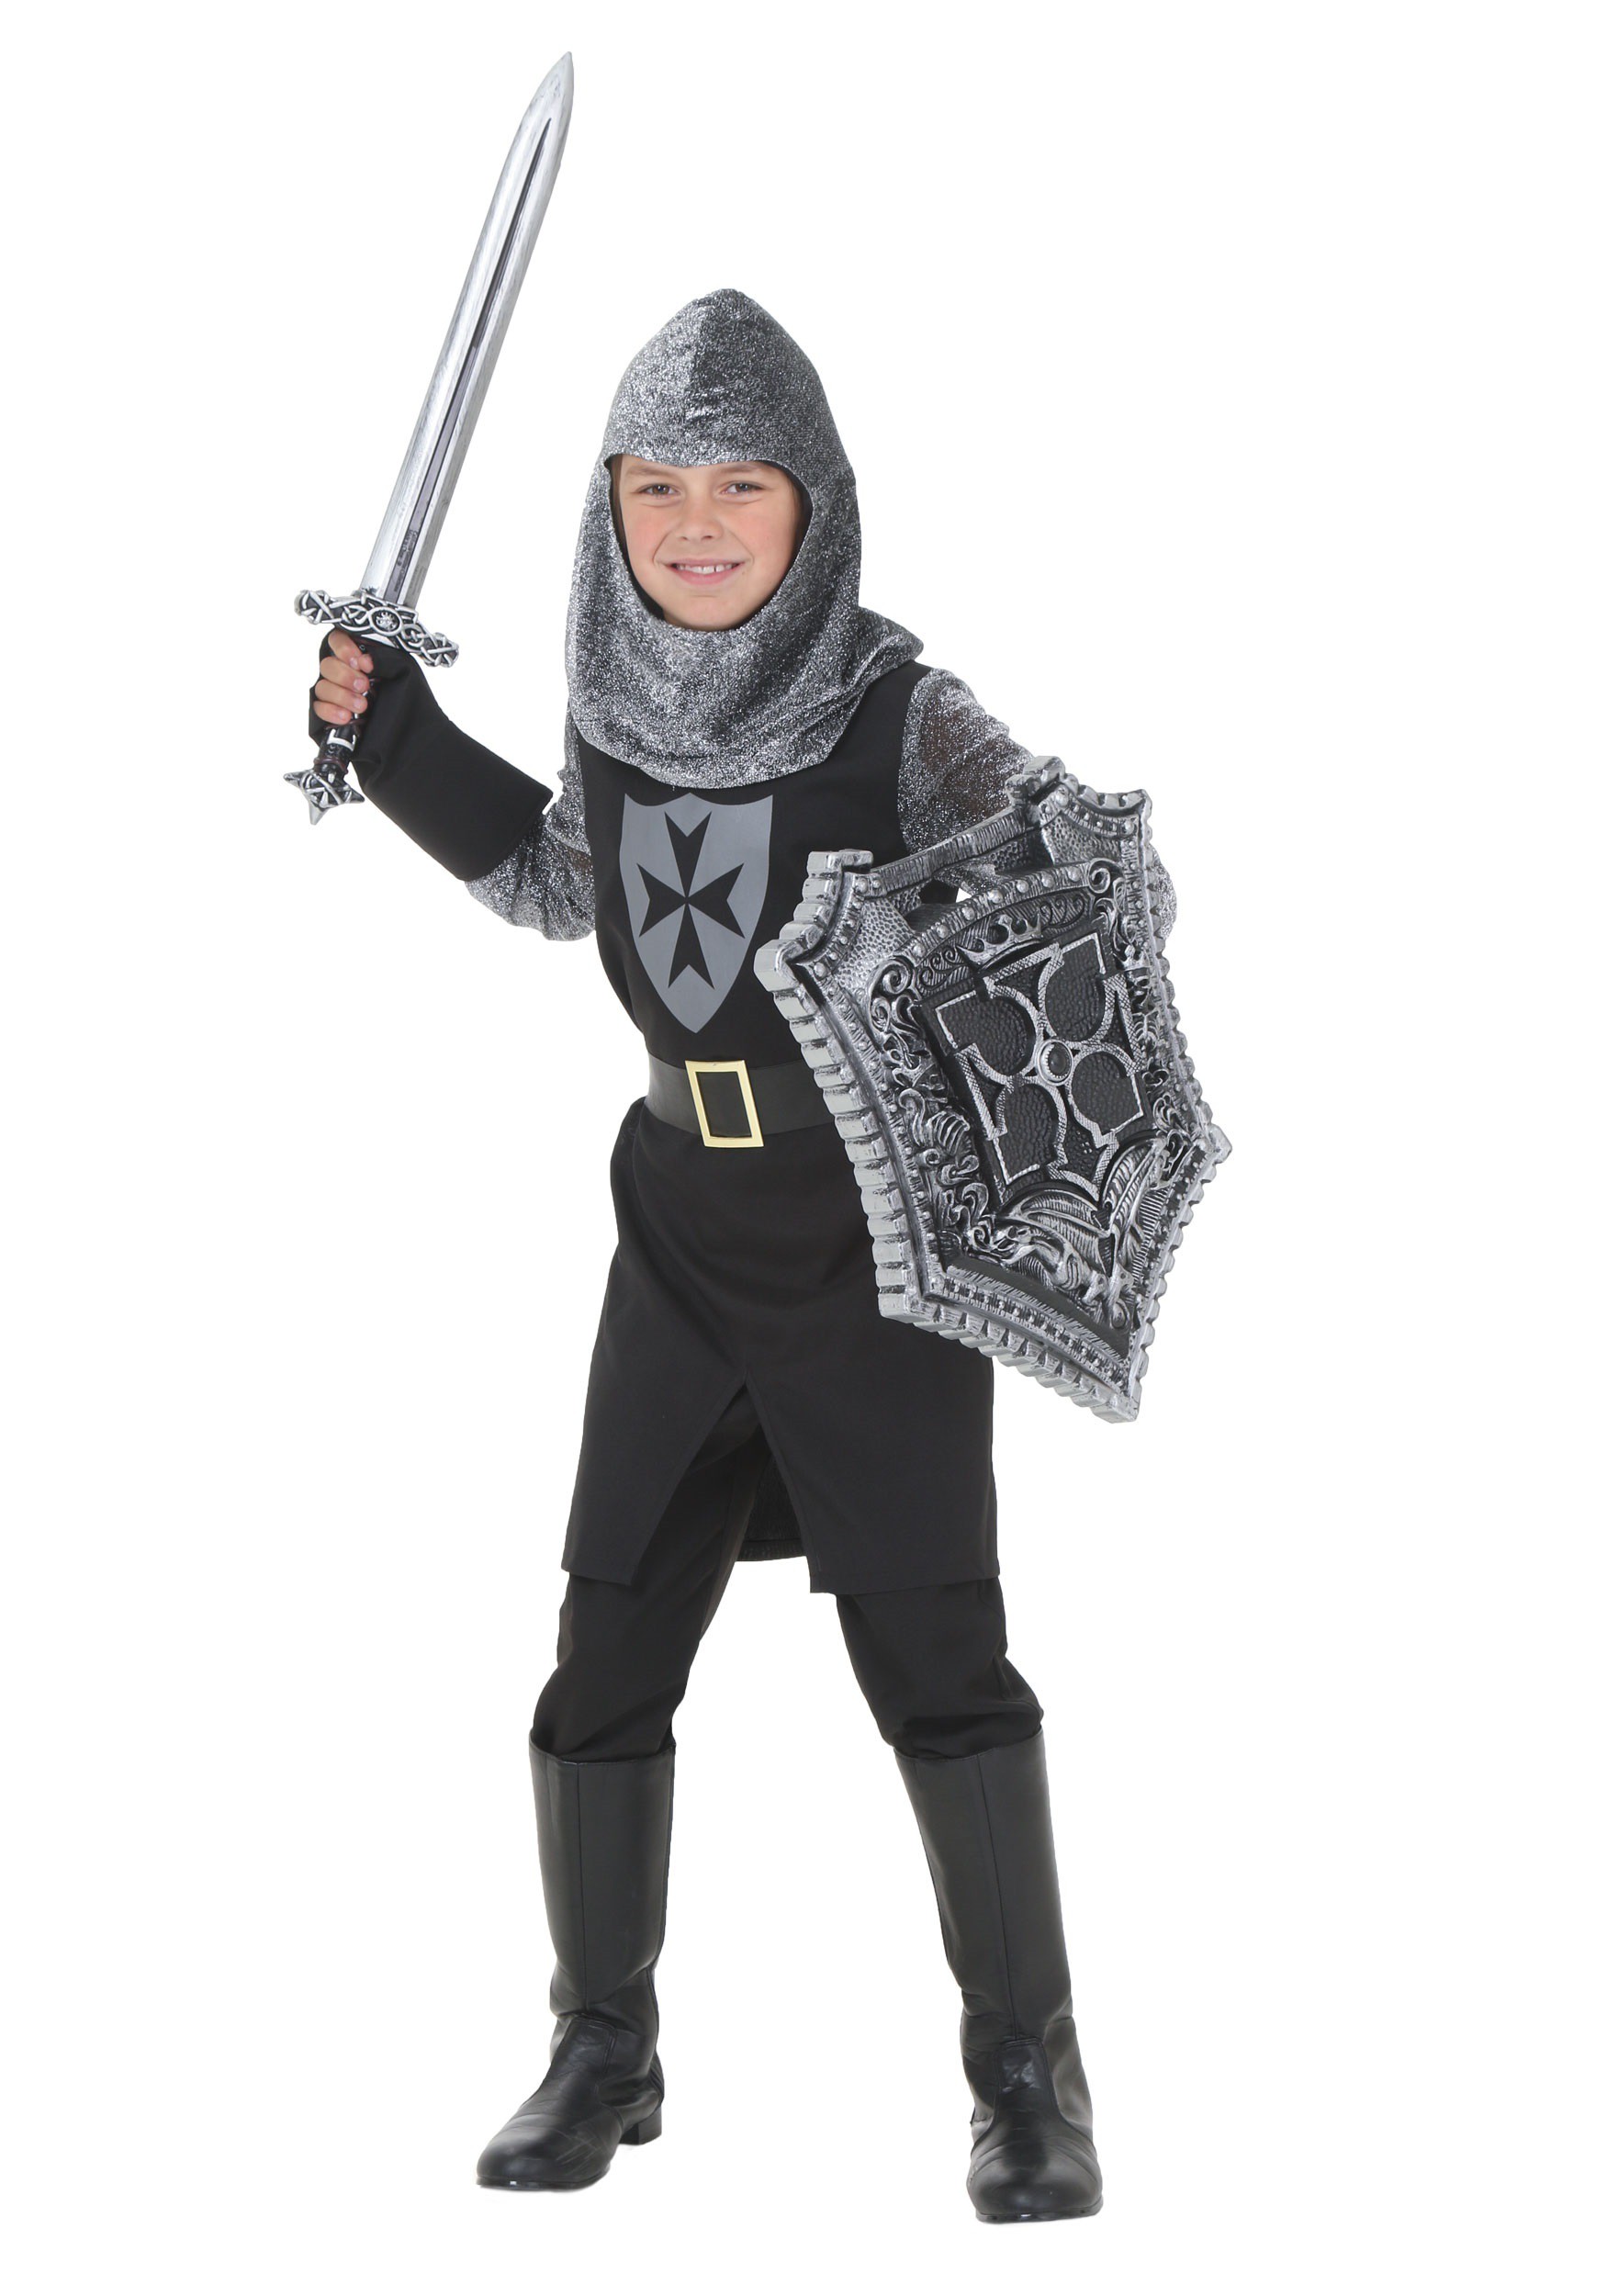 Black Knight Costume for Kids